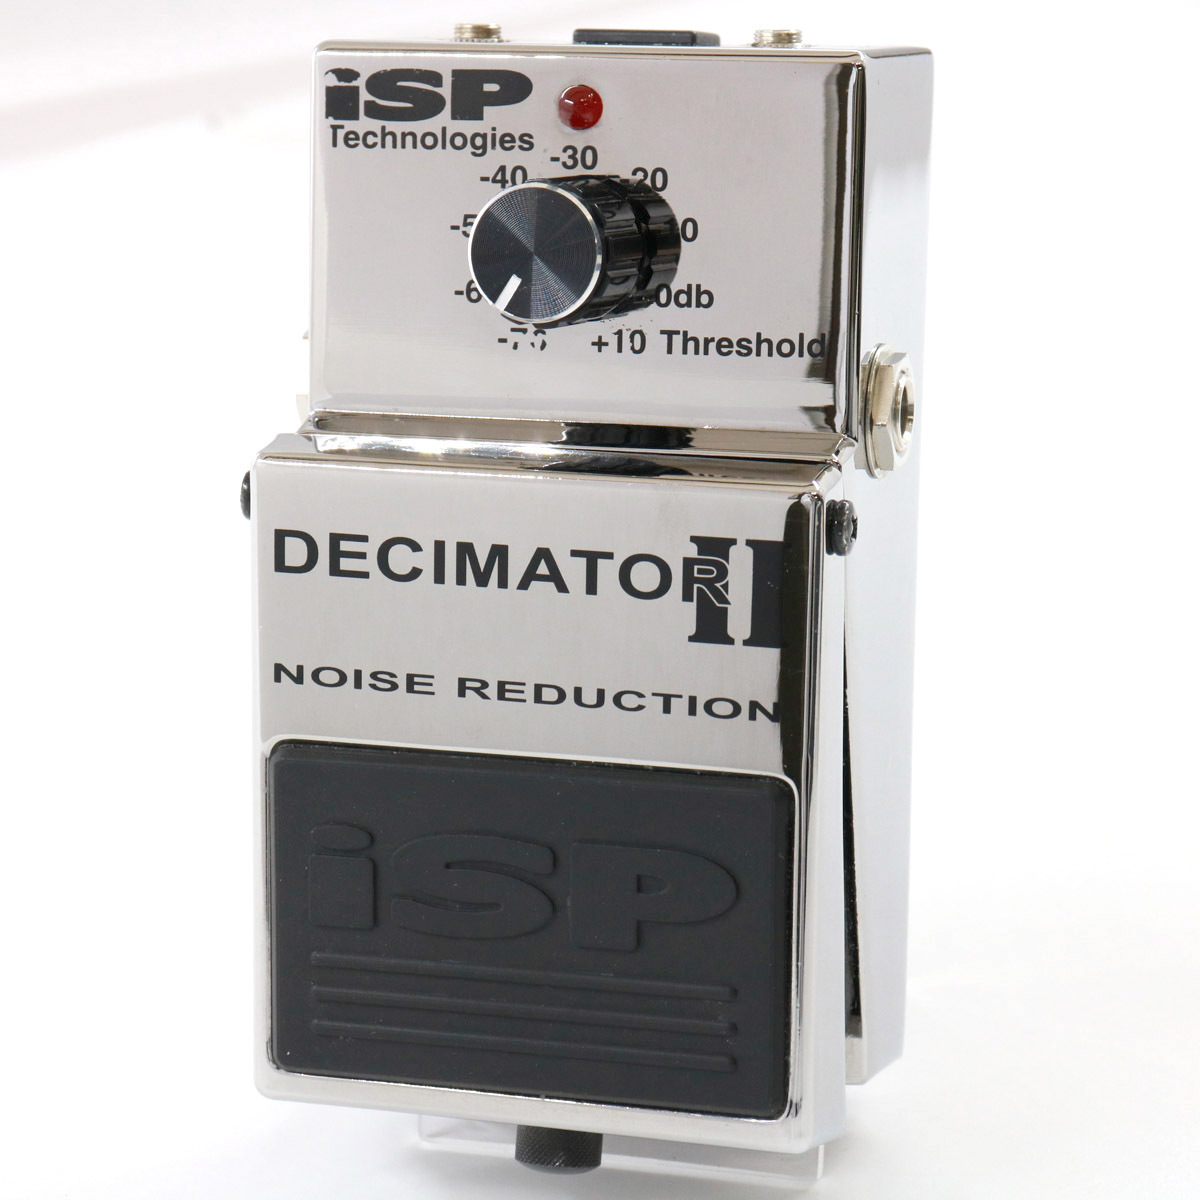 iSP Technologies Decimator II / Noise Reduction ギター用 【池袋店